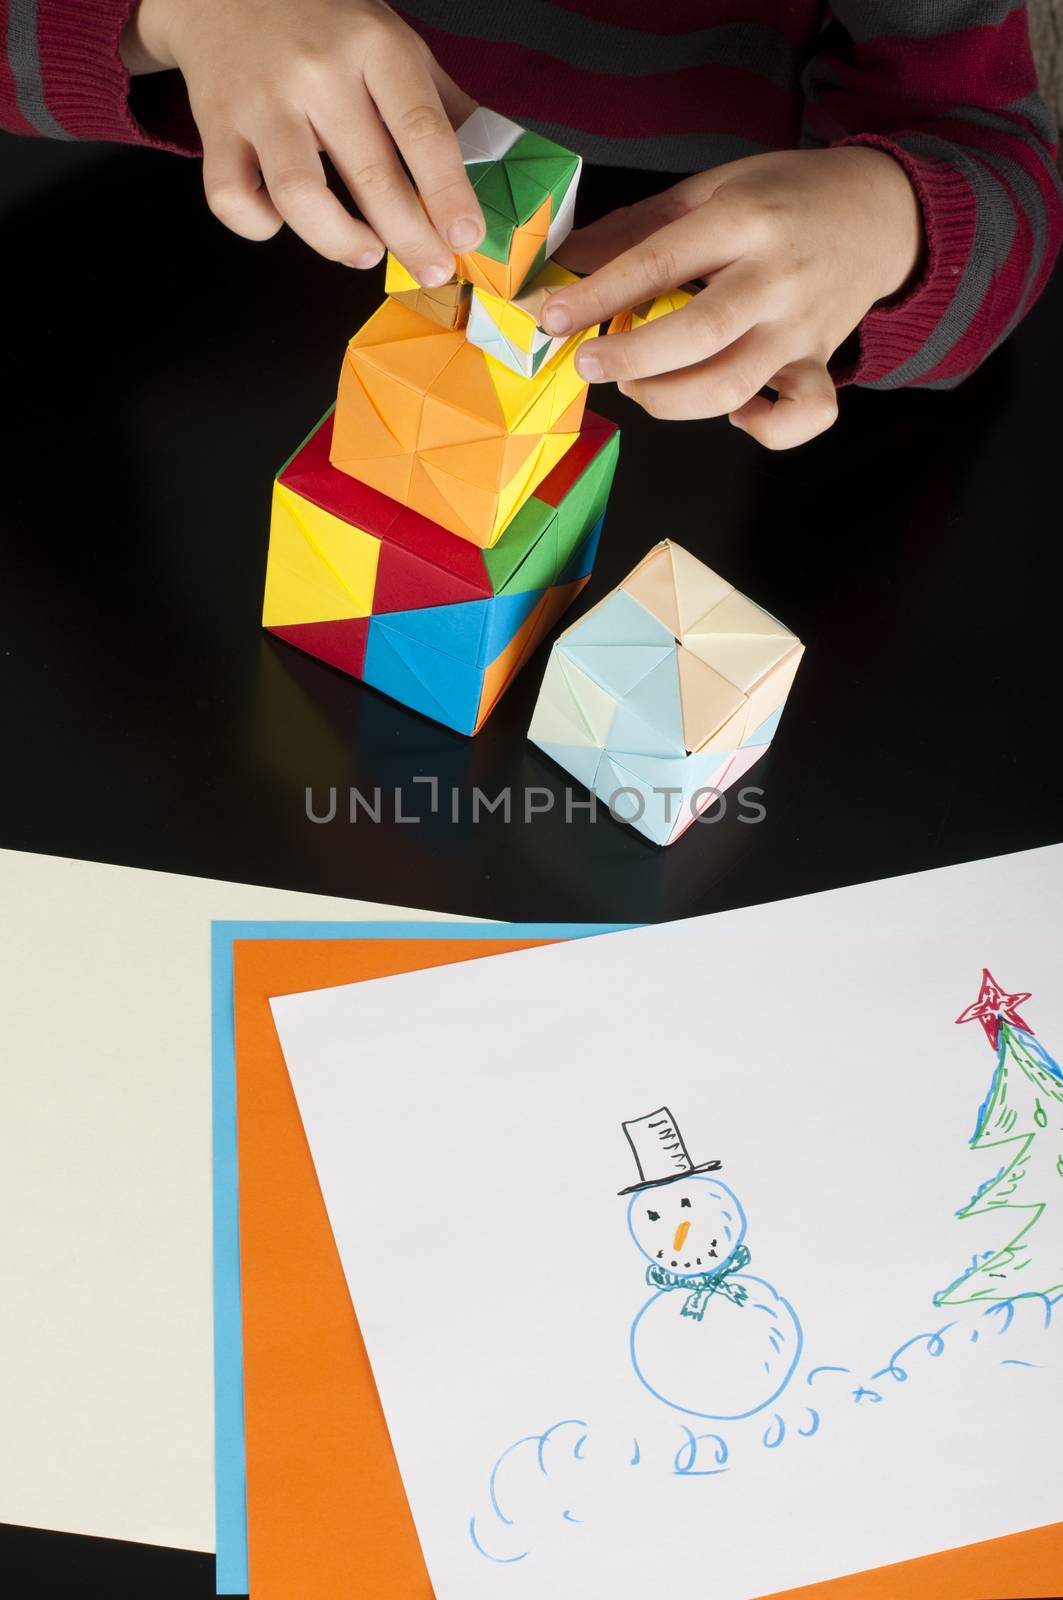 Boy playing with multicolored cubes by deyan_georgiev